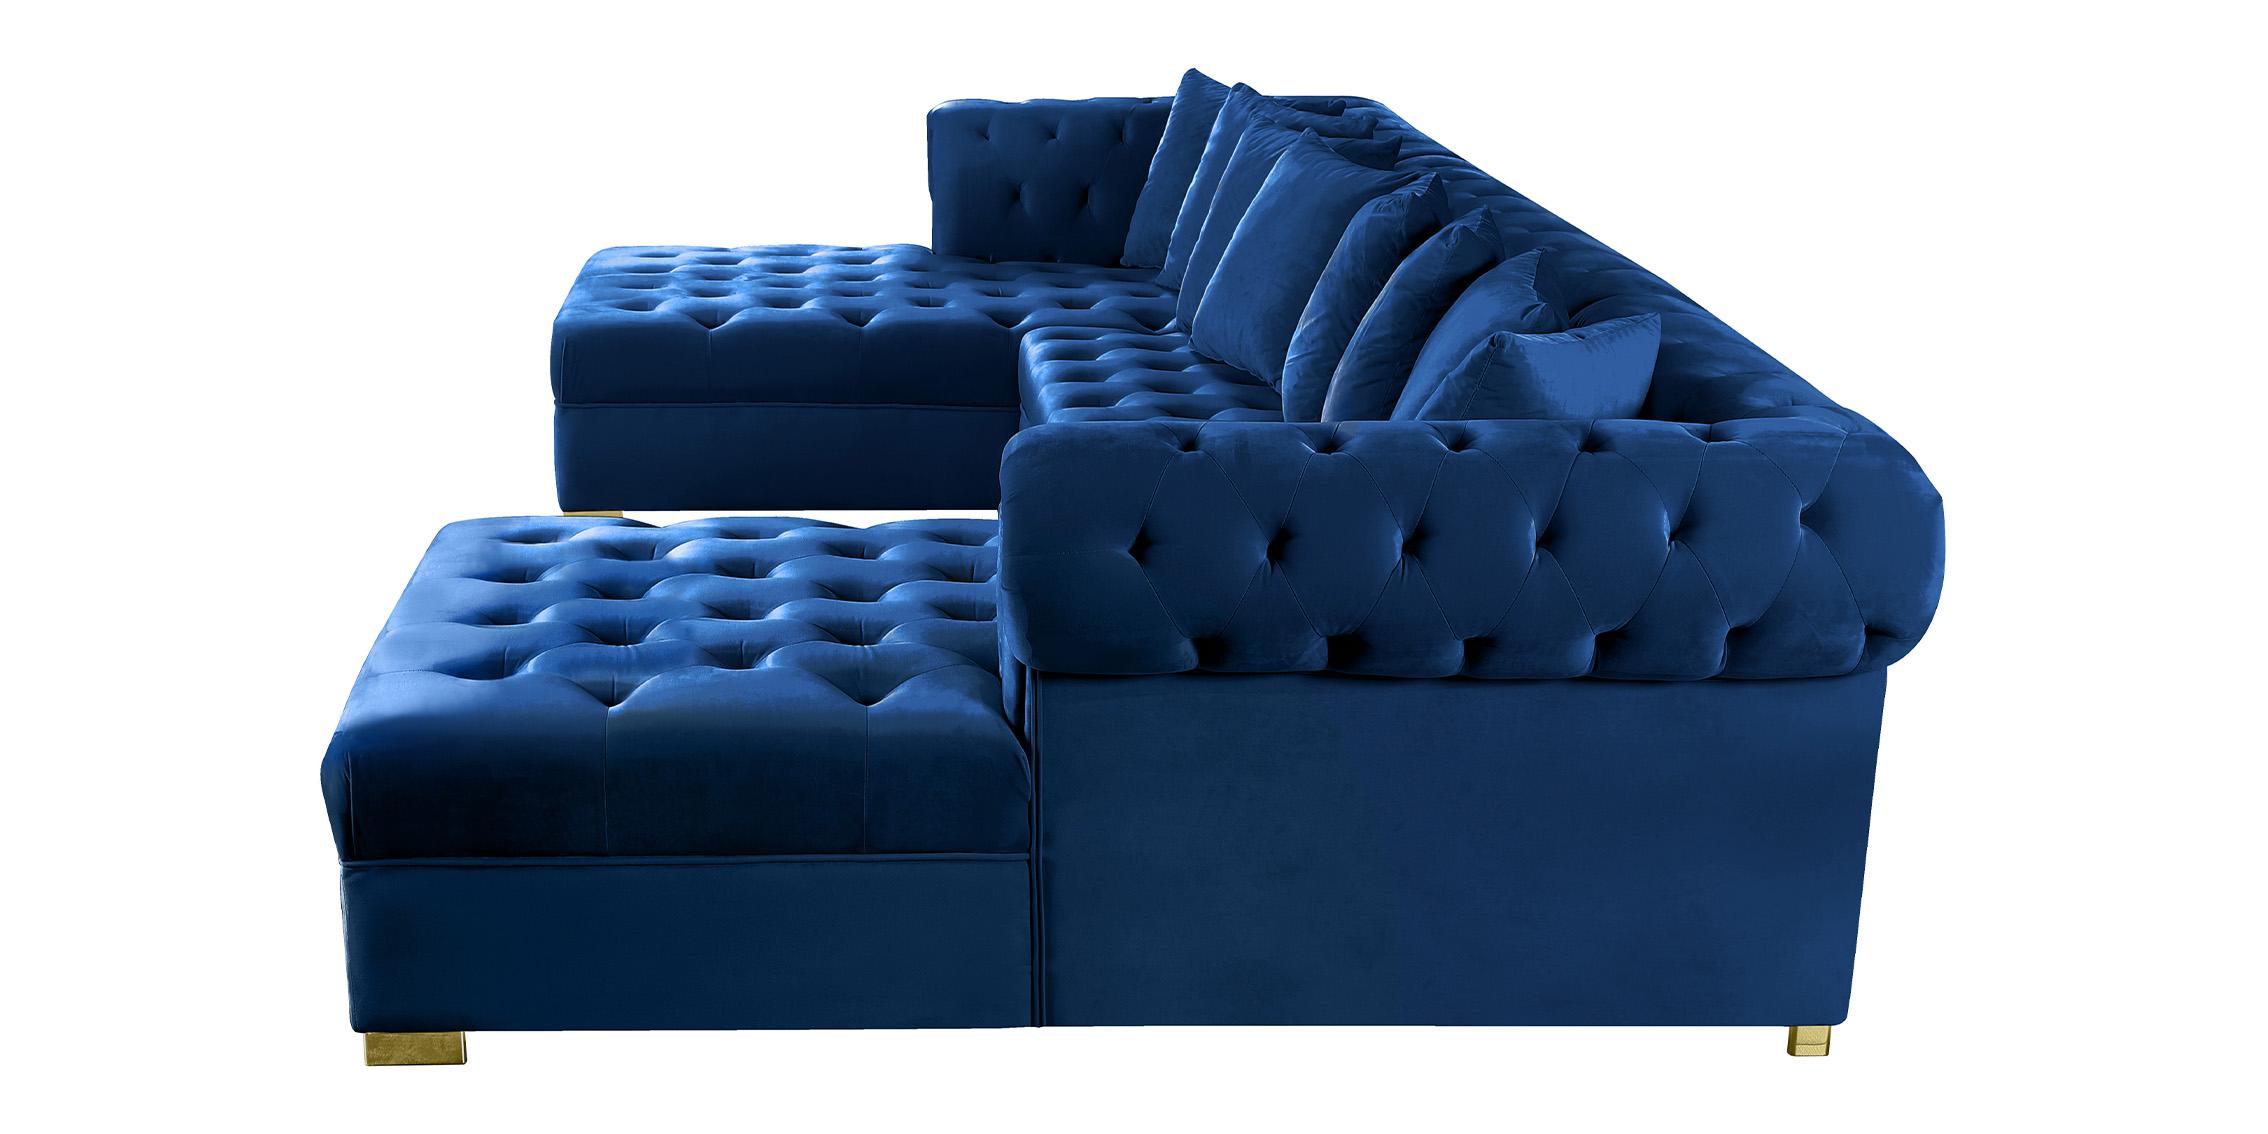 

    
Meridian Furniture PRESLEY 698Navy-Sectional Sectional Sofa Navy blue 698Navy-Sectional
